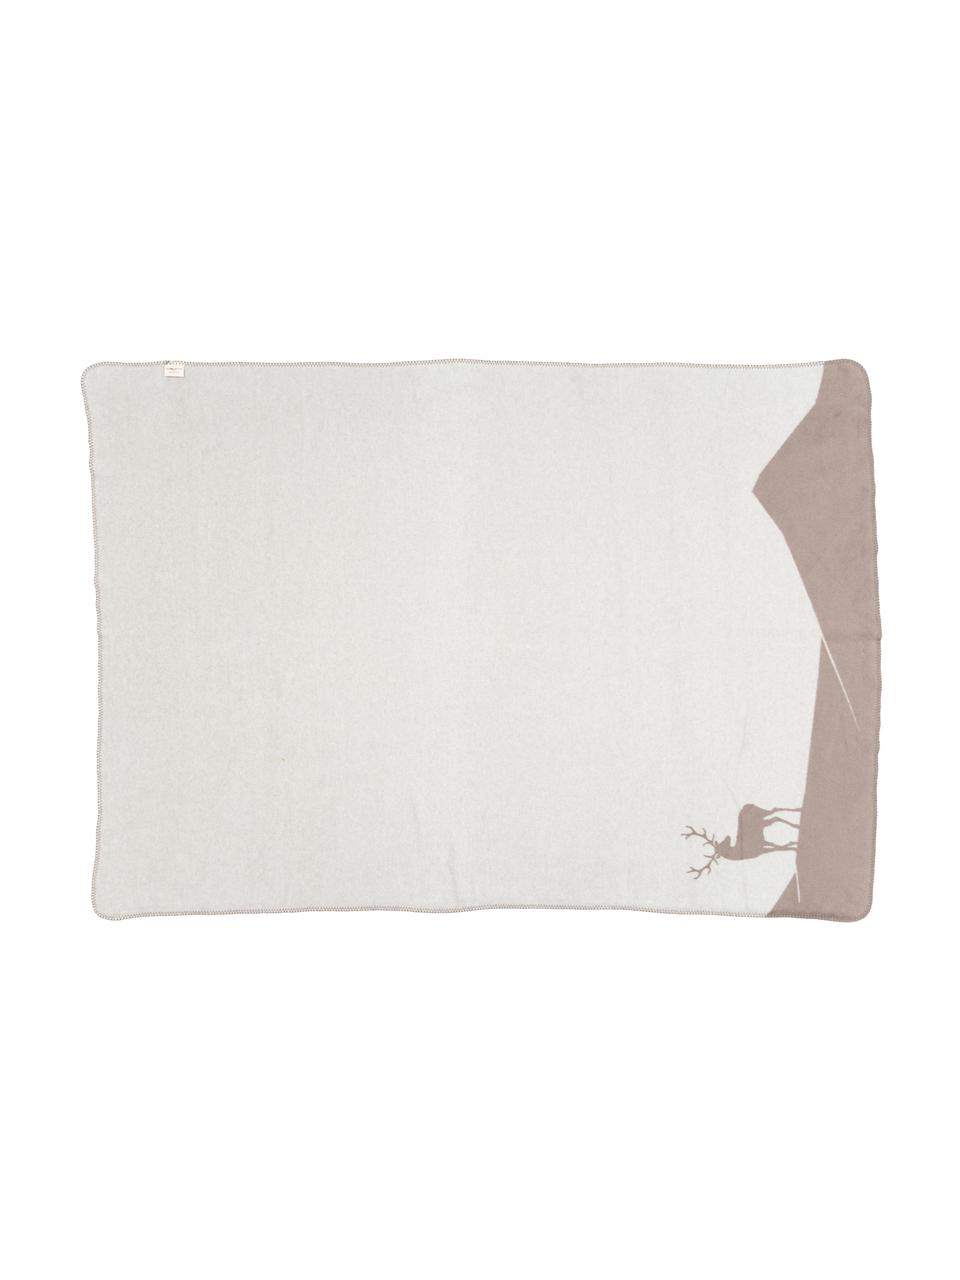 Manta doble cara de tela polar Savona Hirsch, Beige, blanco, An 150 x L 200 cm